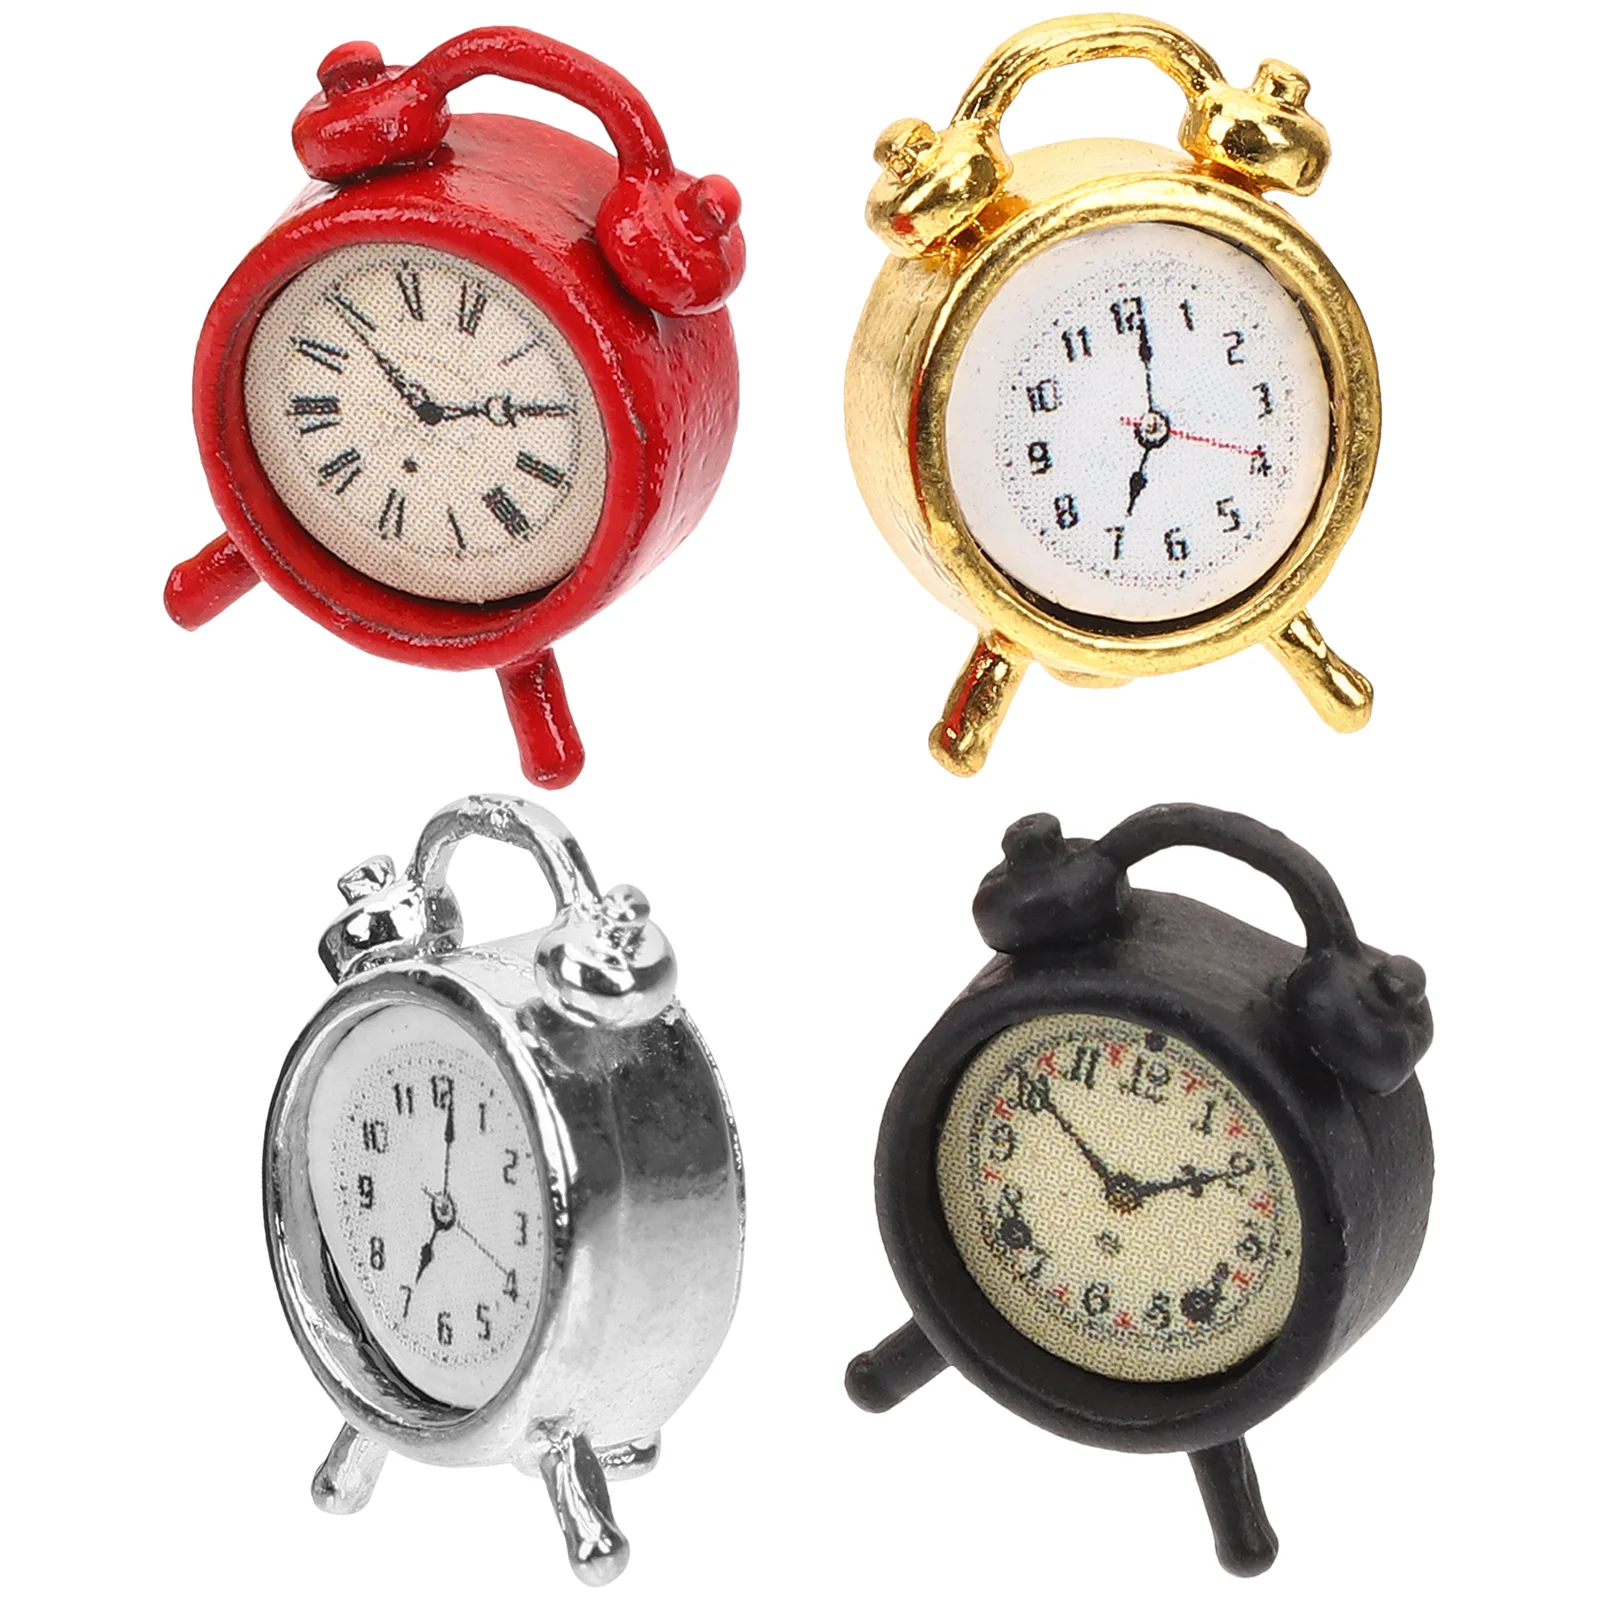 

4 Pcs Miniature Accessory Model Small Clock Toddler Ornament Alarm Clocks Toodler Toys Tiny